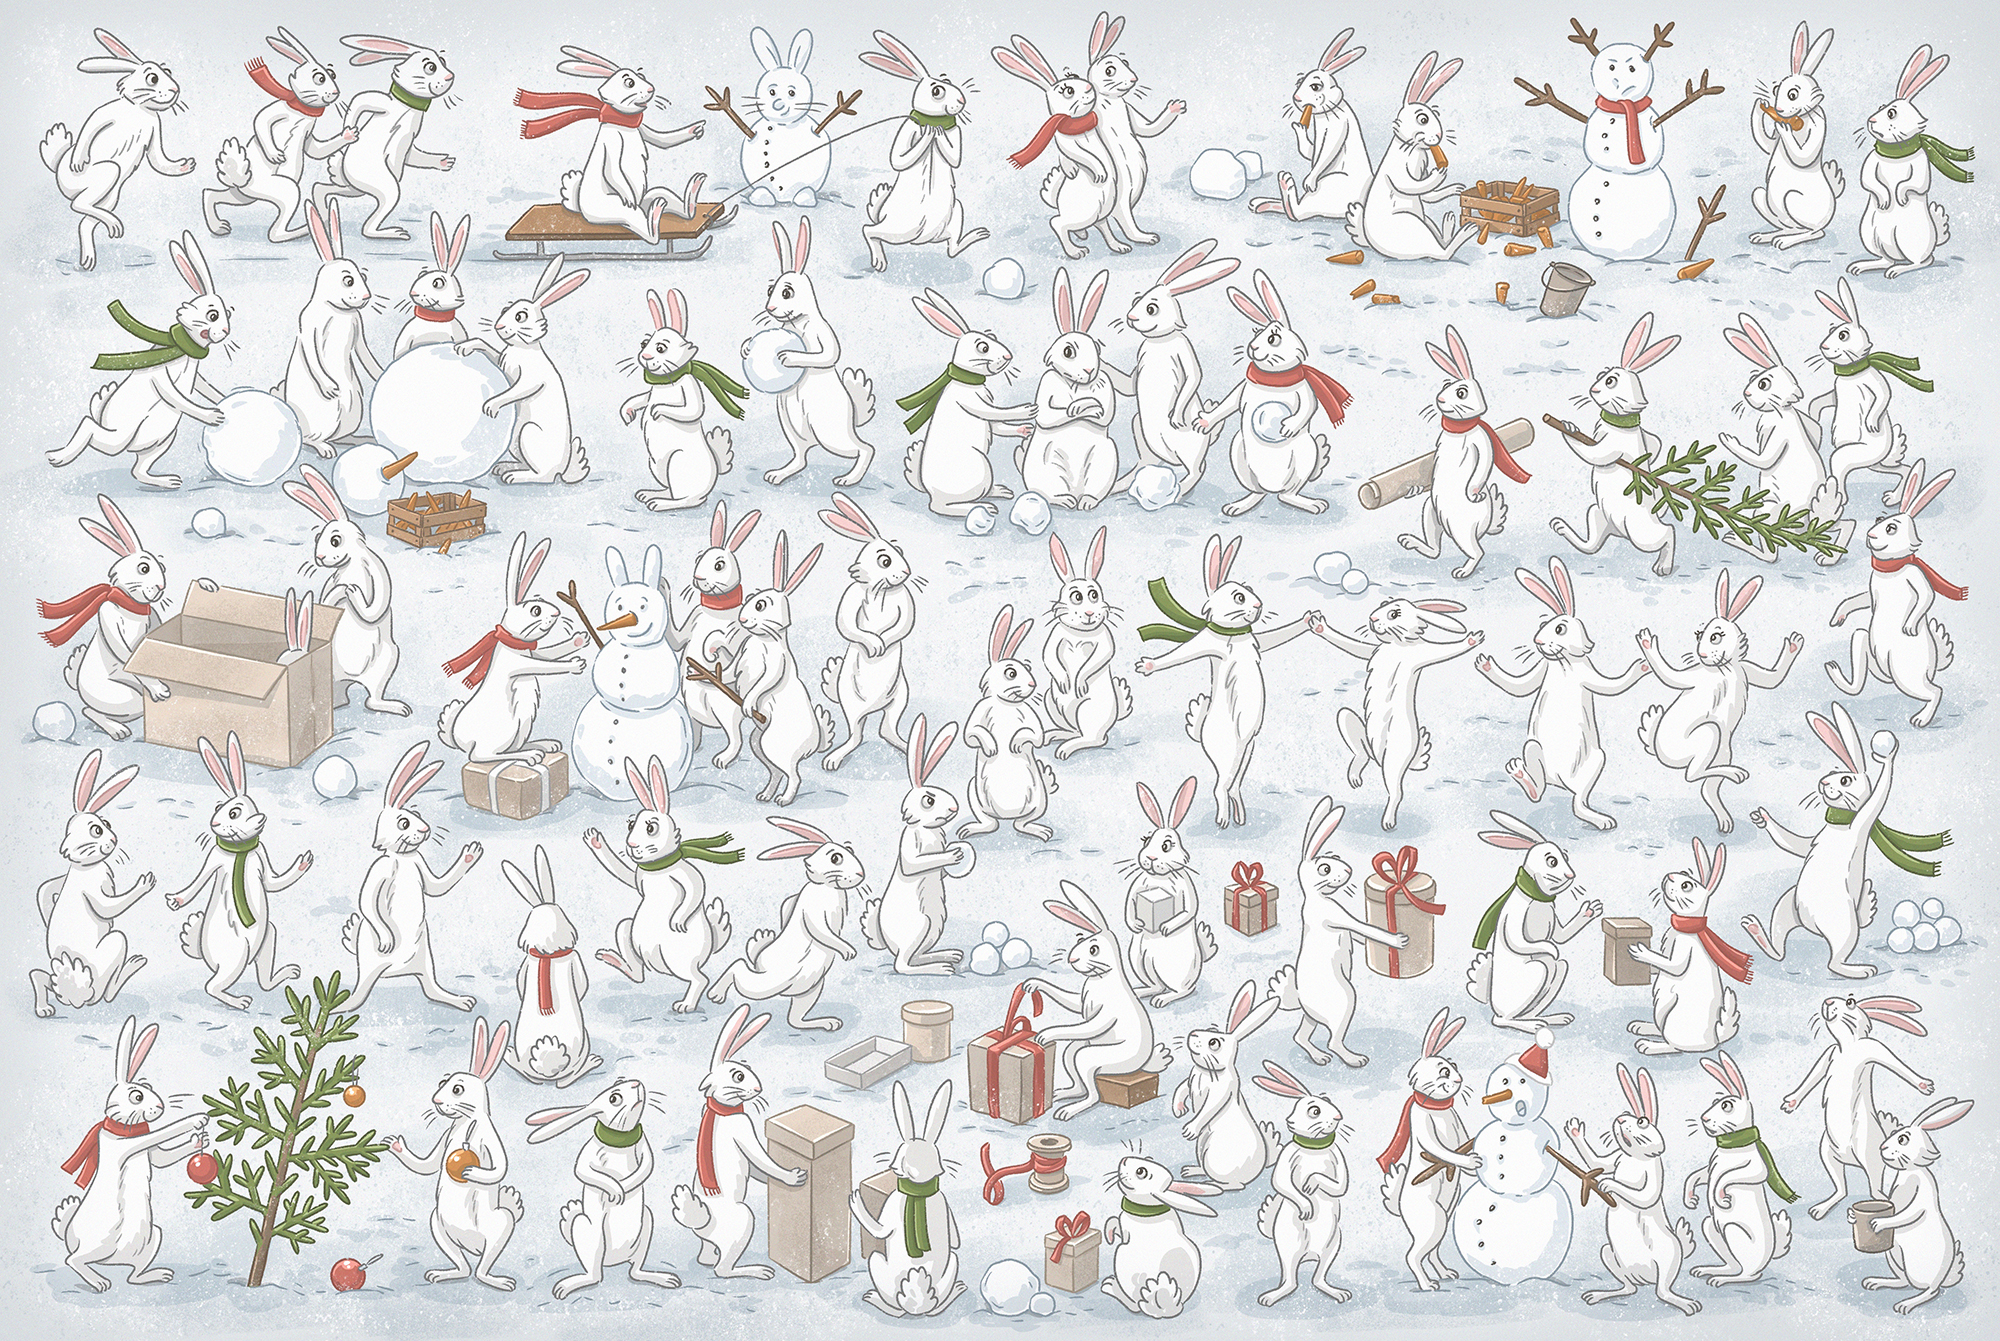 Wimmelbuch rabbits